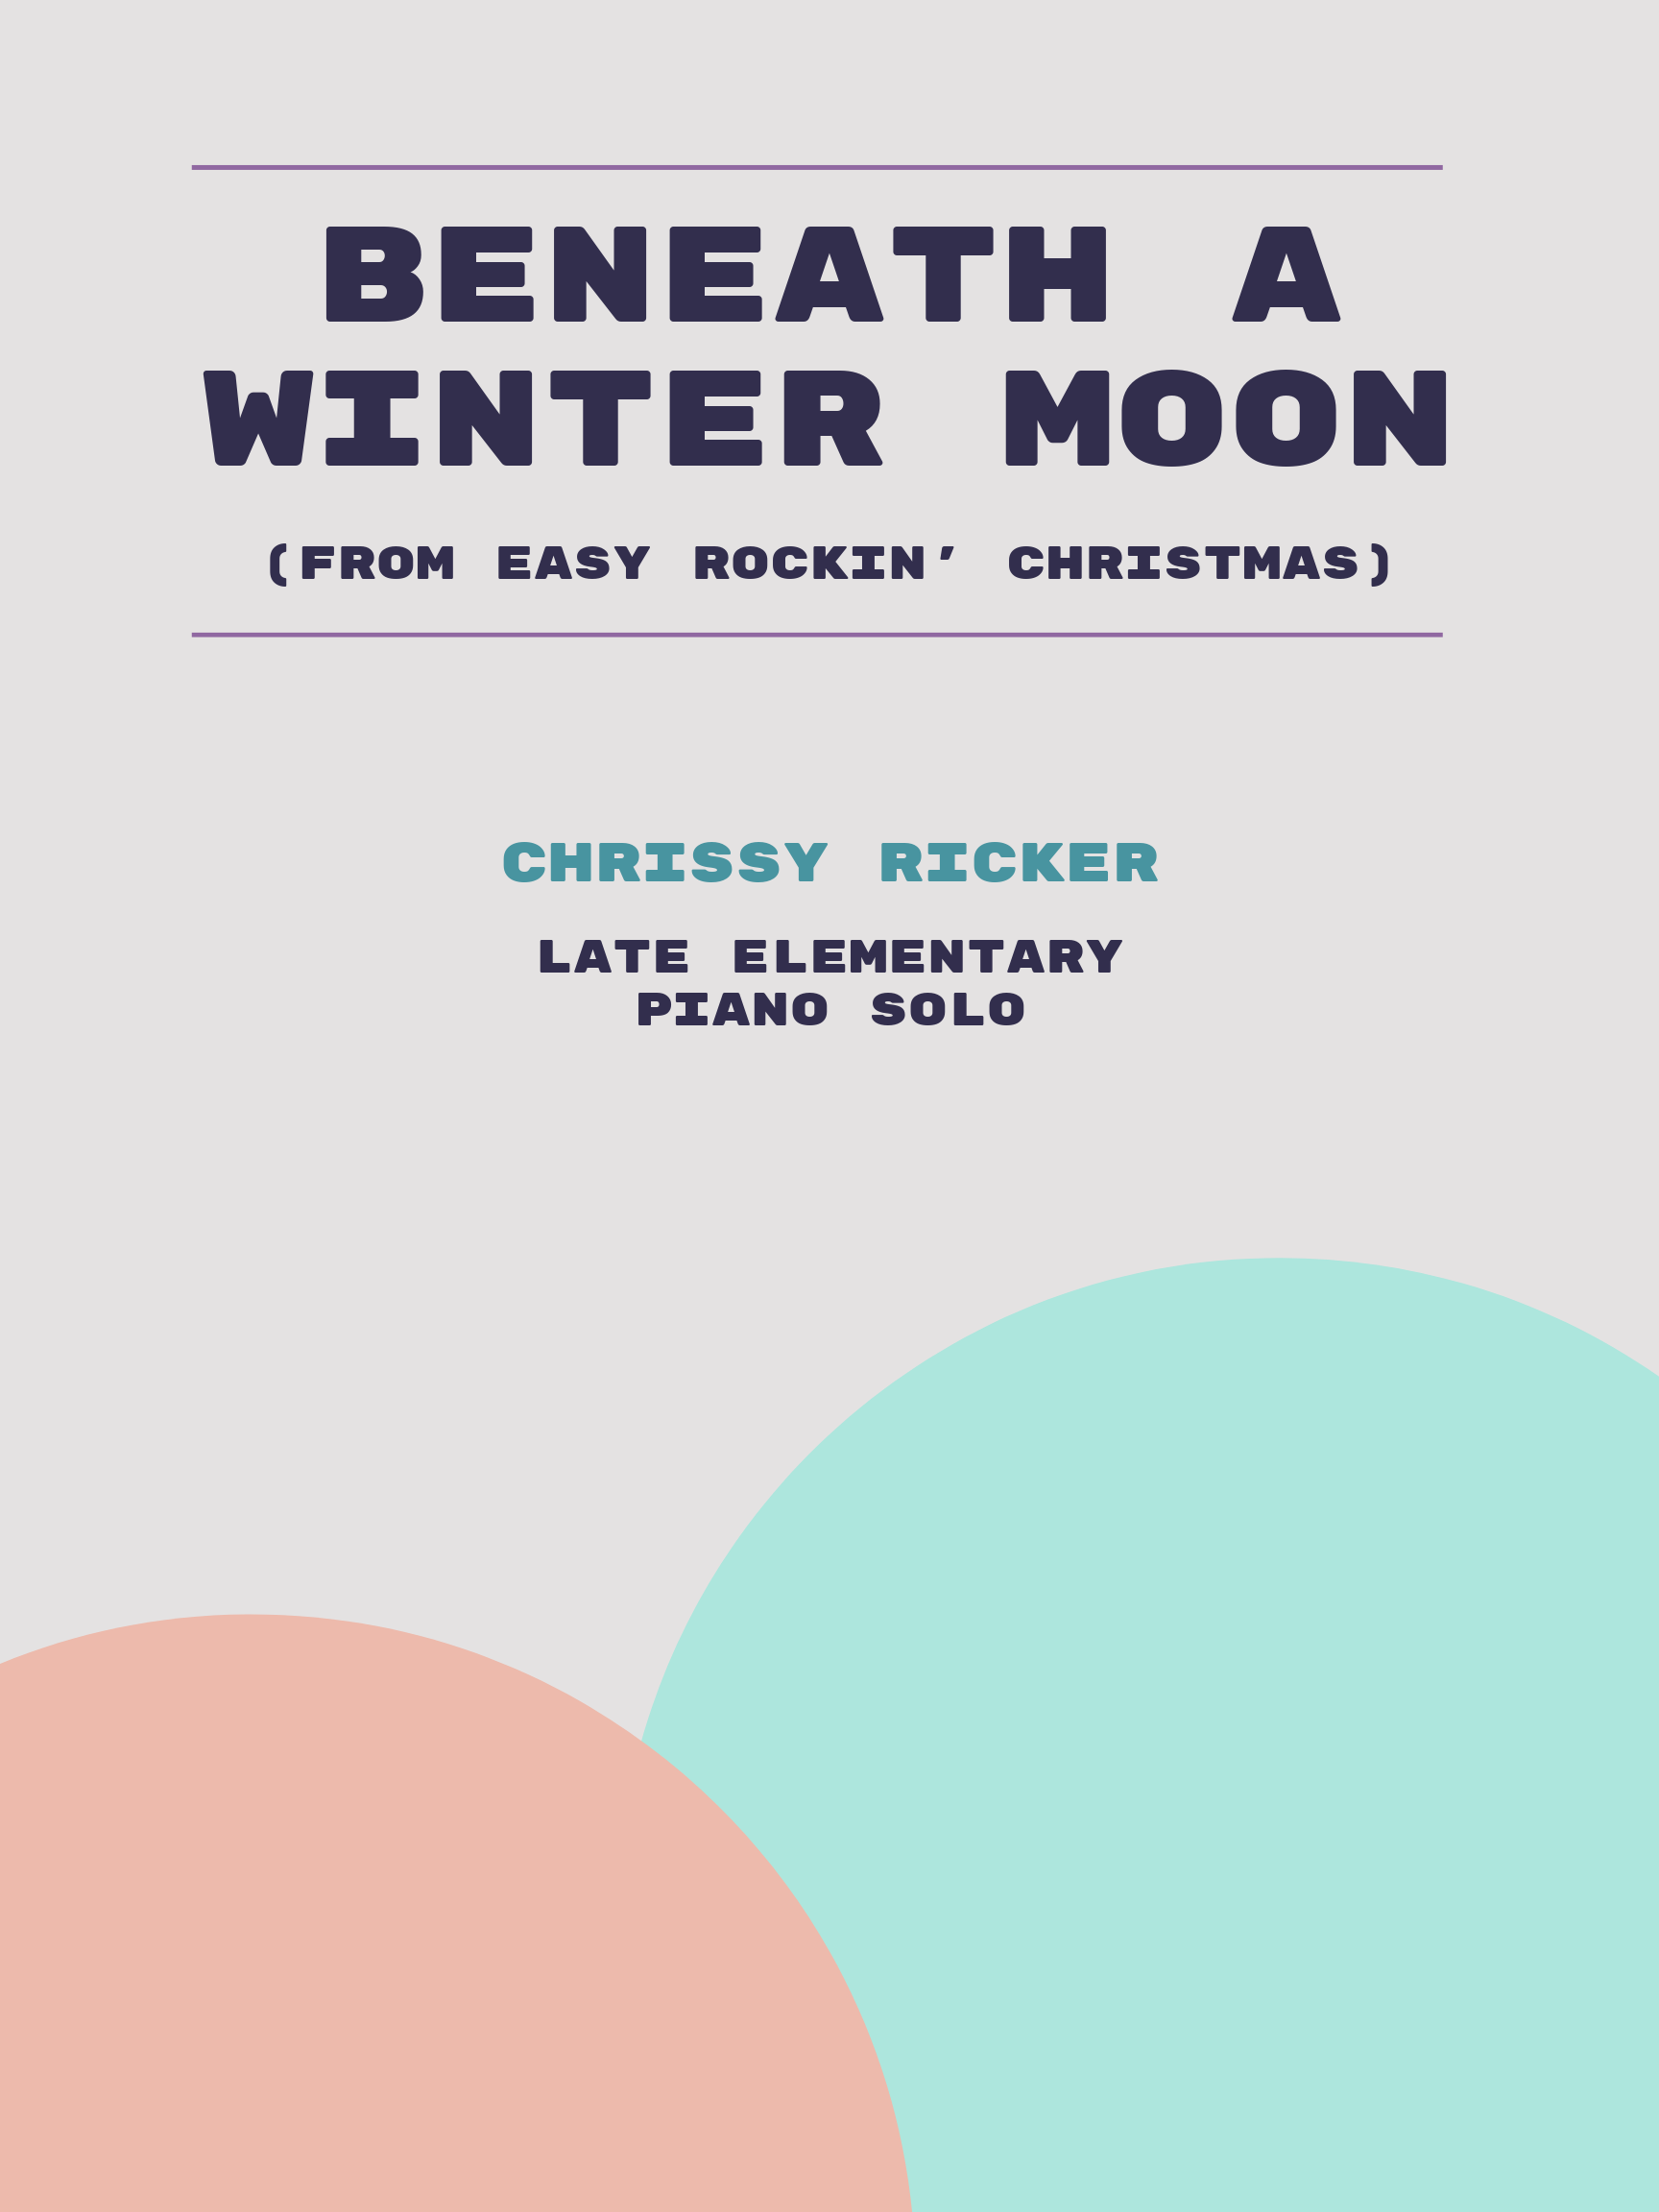 Beneath a Winter Moon by Chrissy Ricker